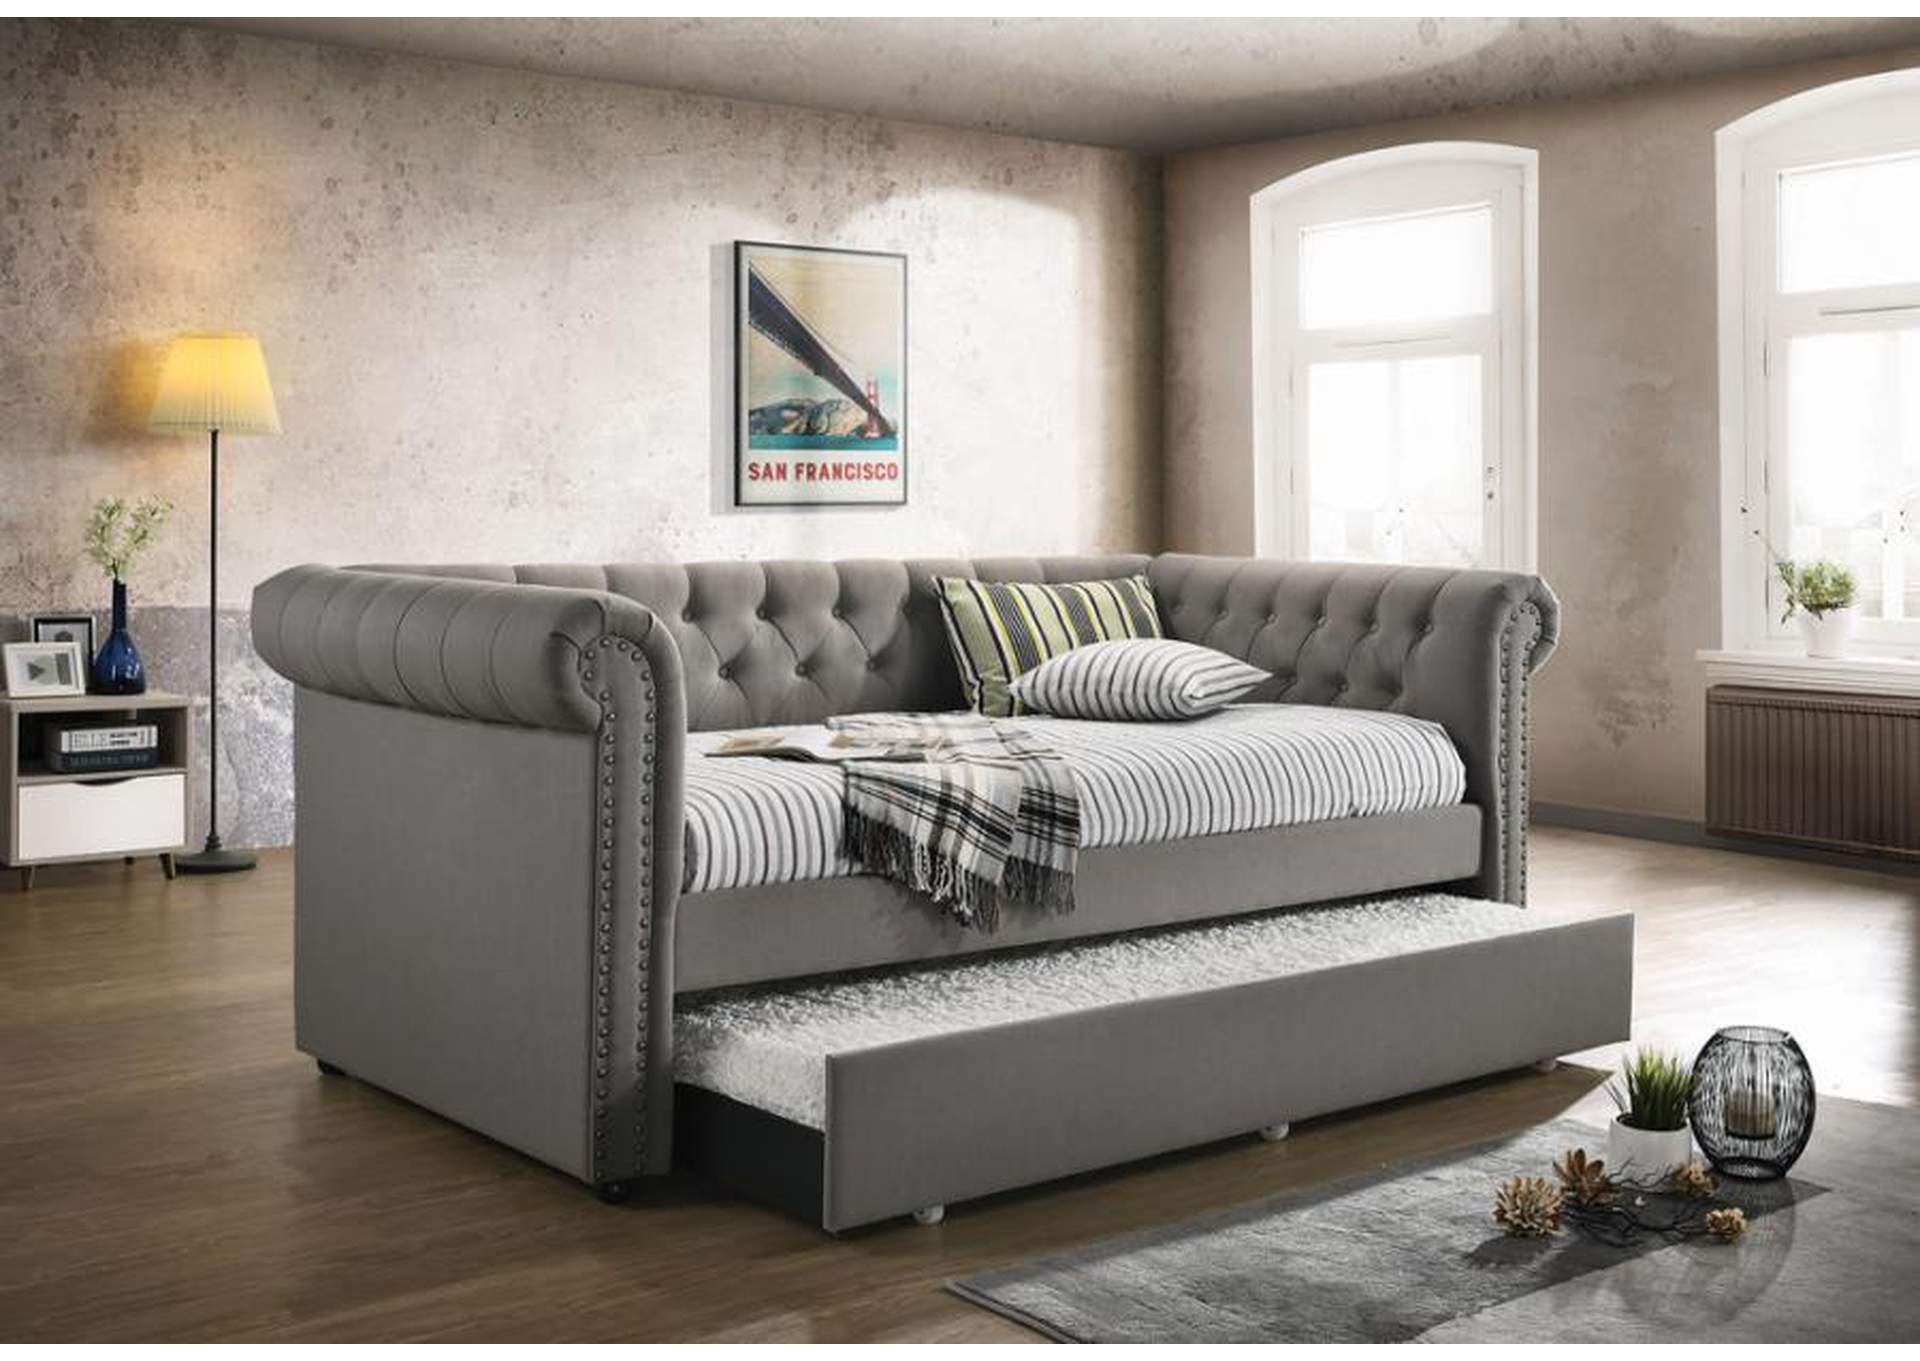 Kepner Tufted Upholstered Daybed Grey with Trundle,Coaster Furniture